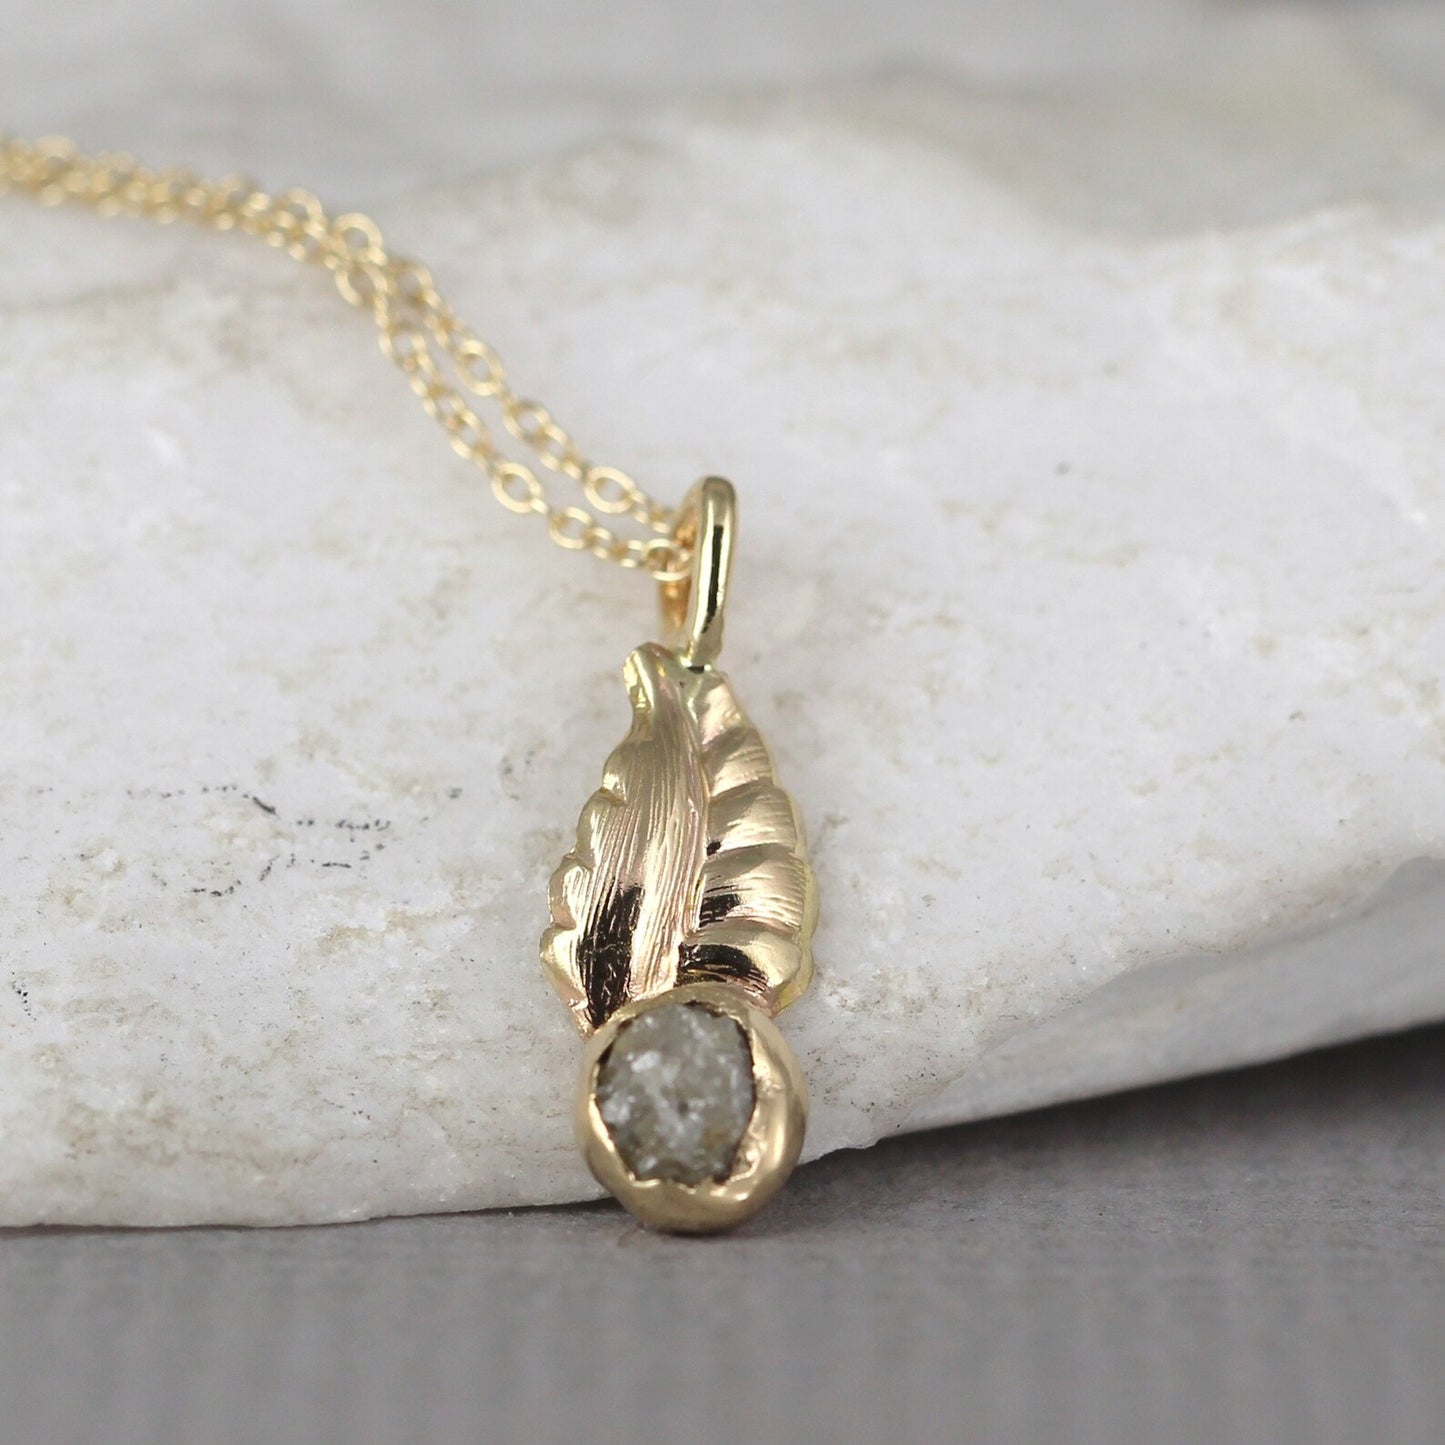 Leaf Design Raw Diamond Necklace - 14K Yellow Gold - Rough Diamond Pendant - Uncut, Conflict Free Diamond - April Birthstone